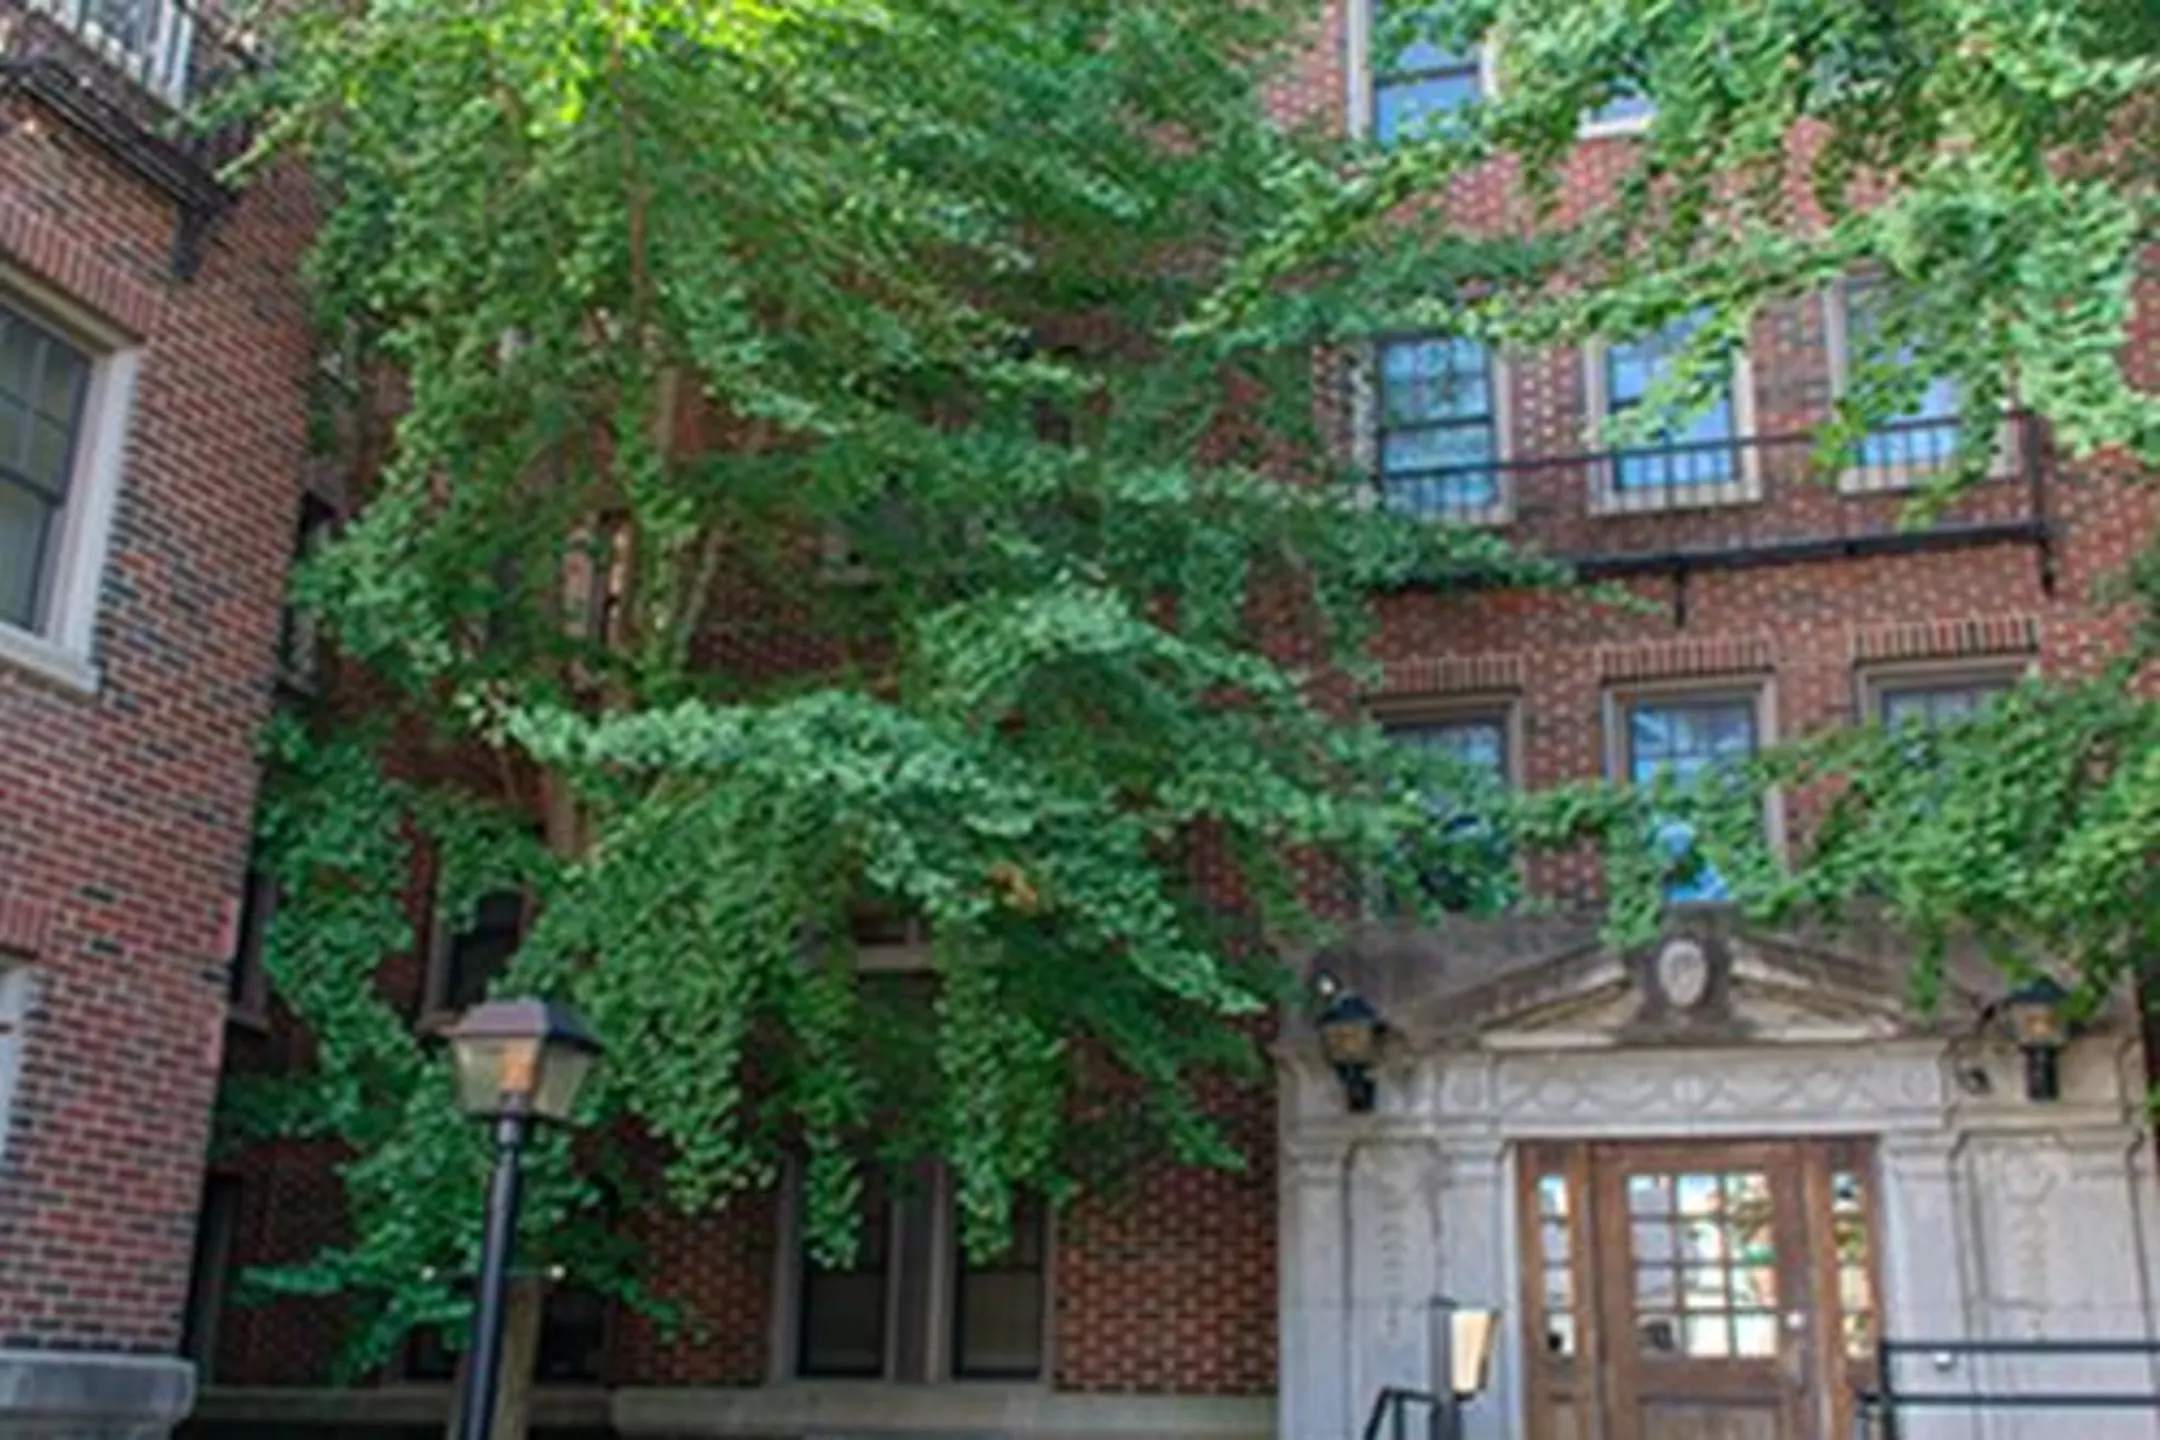 Building - Bernice Arms Senior Apartments (62+) - Philadelphia, PA